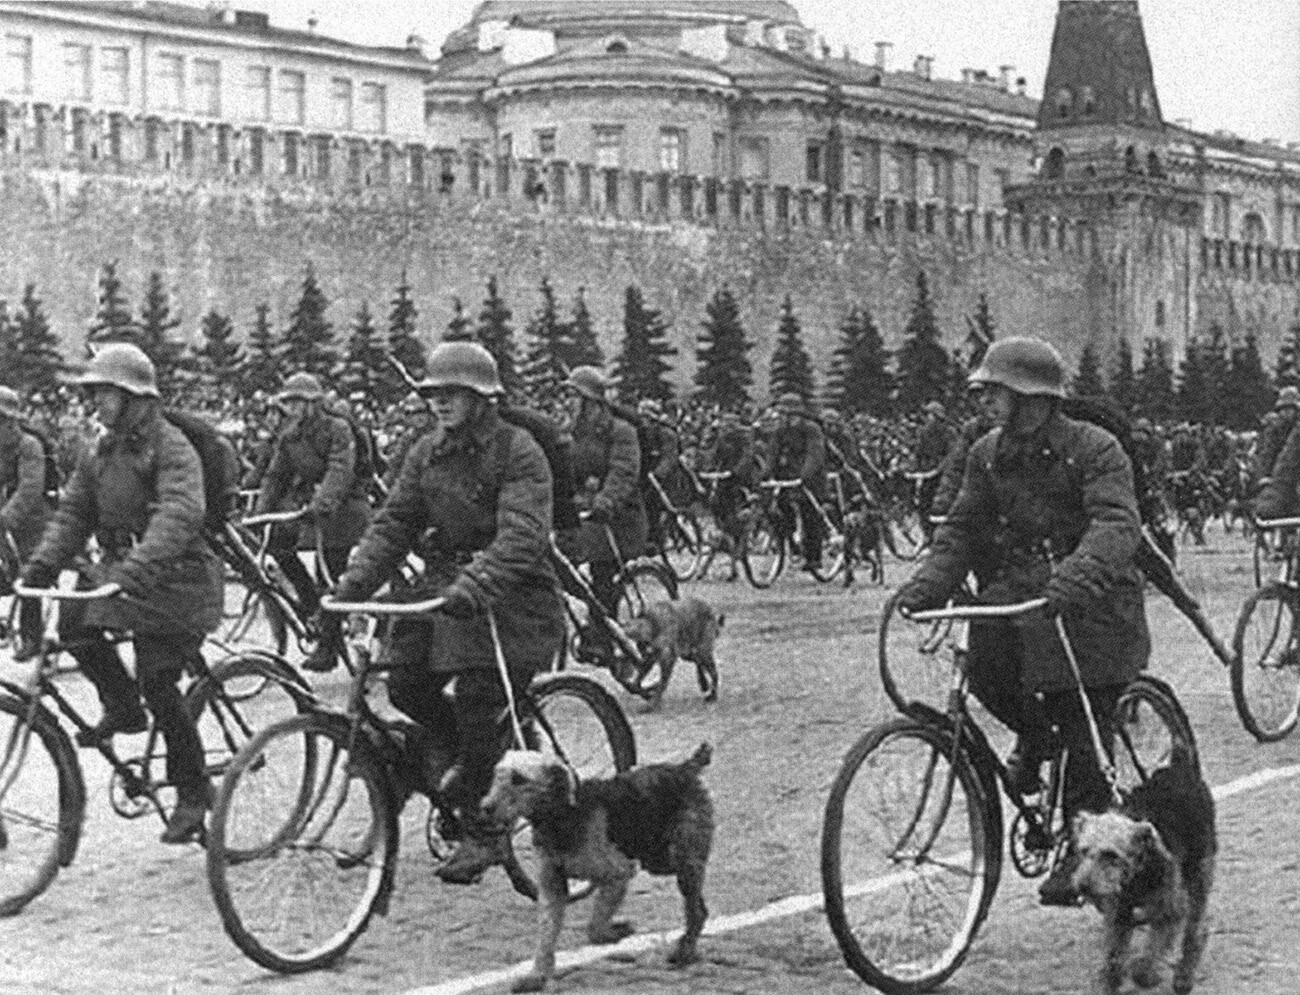 Pasukan bersepeda selama parade di Lapangan Merah, 1938.